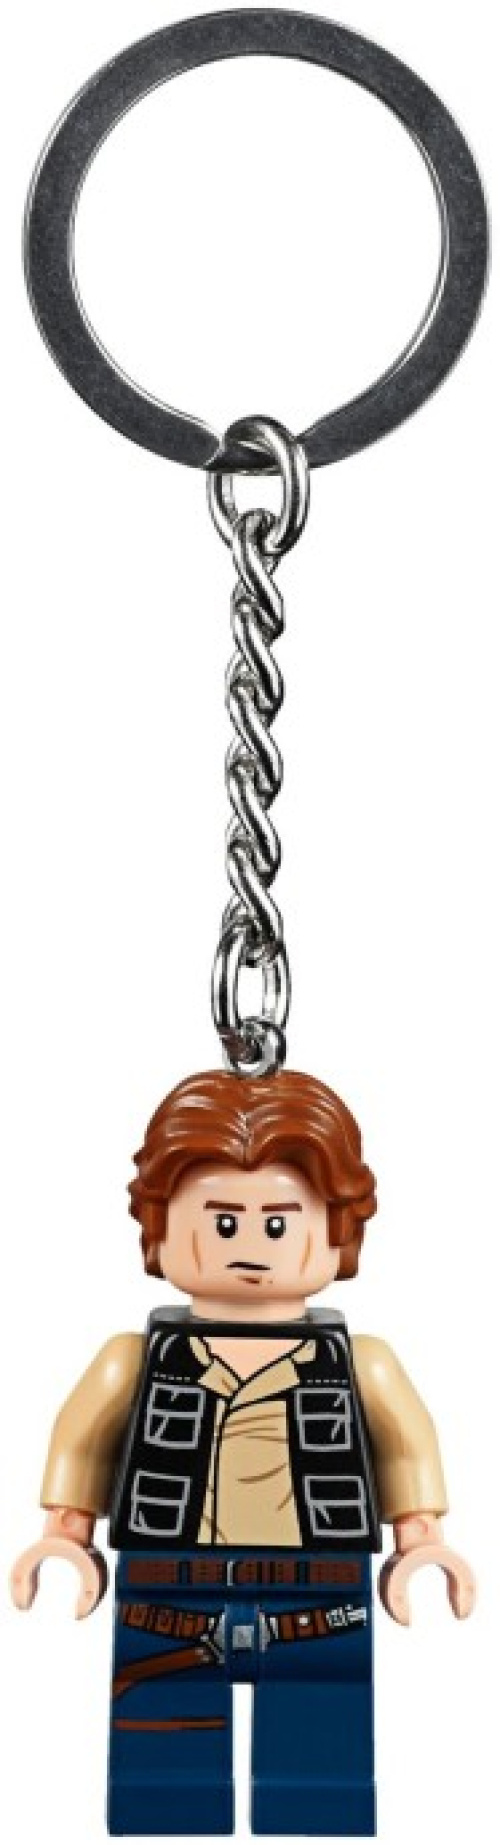 853769-1 Han Solo Key Chain